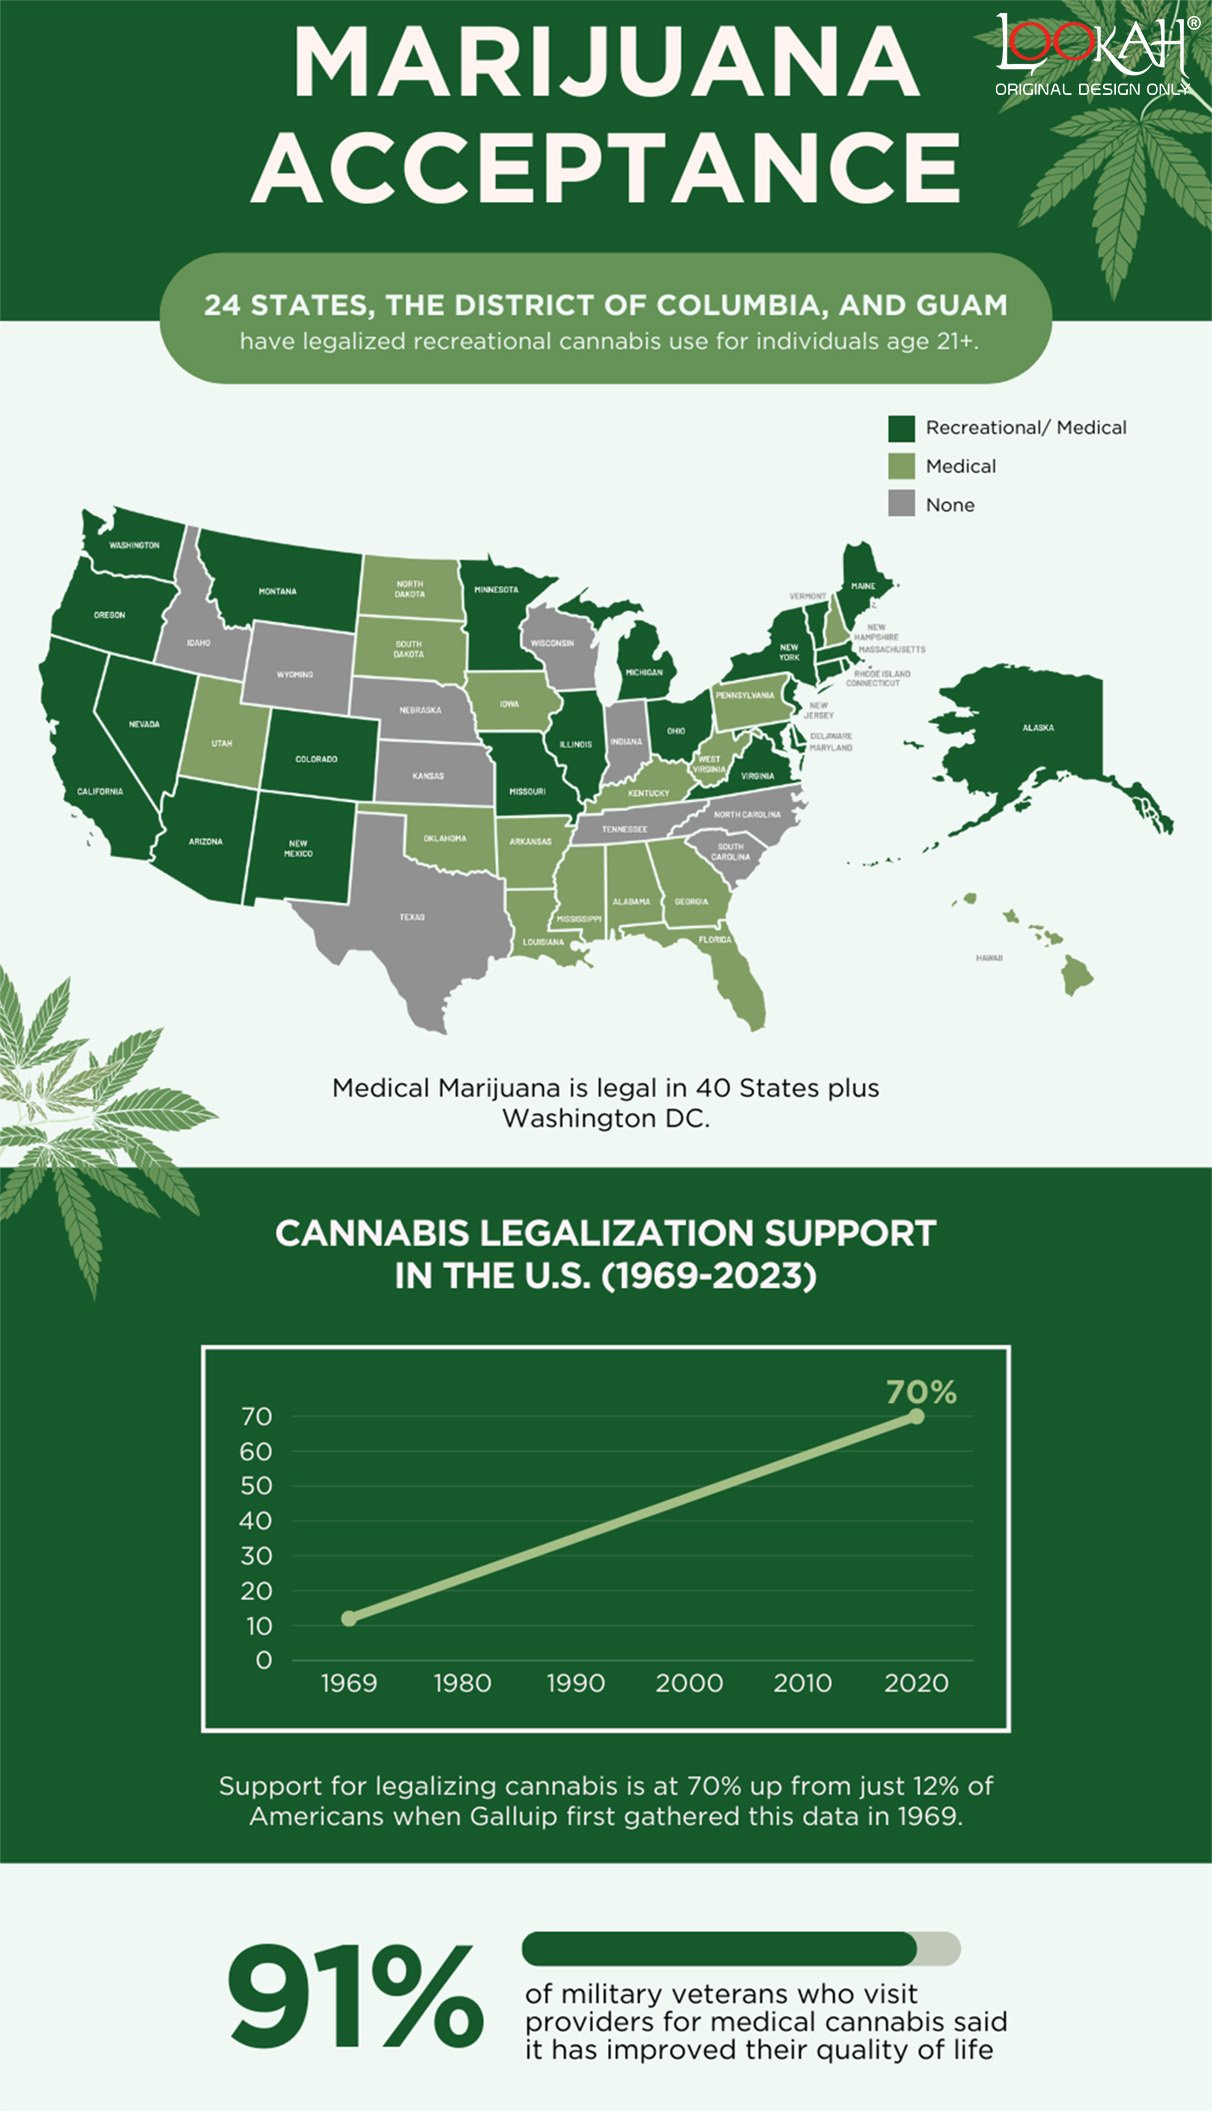 Marijuana acceptance in the United States